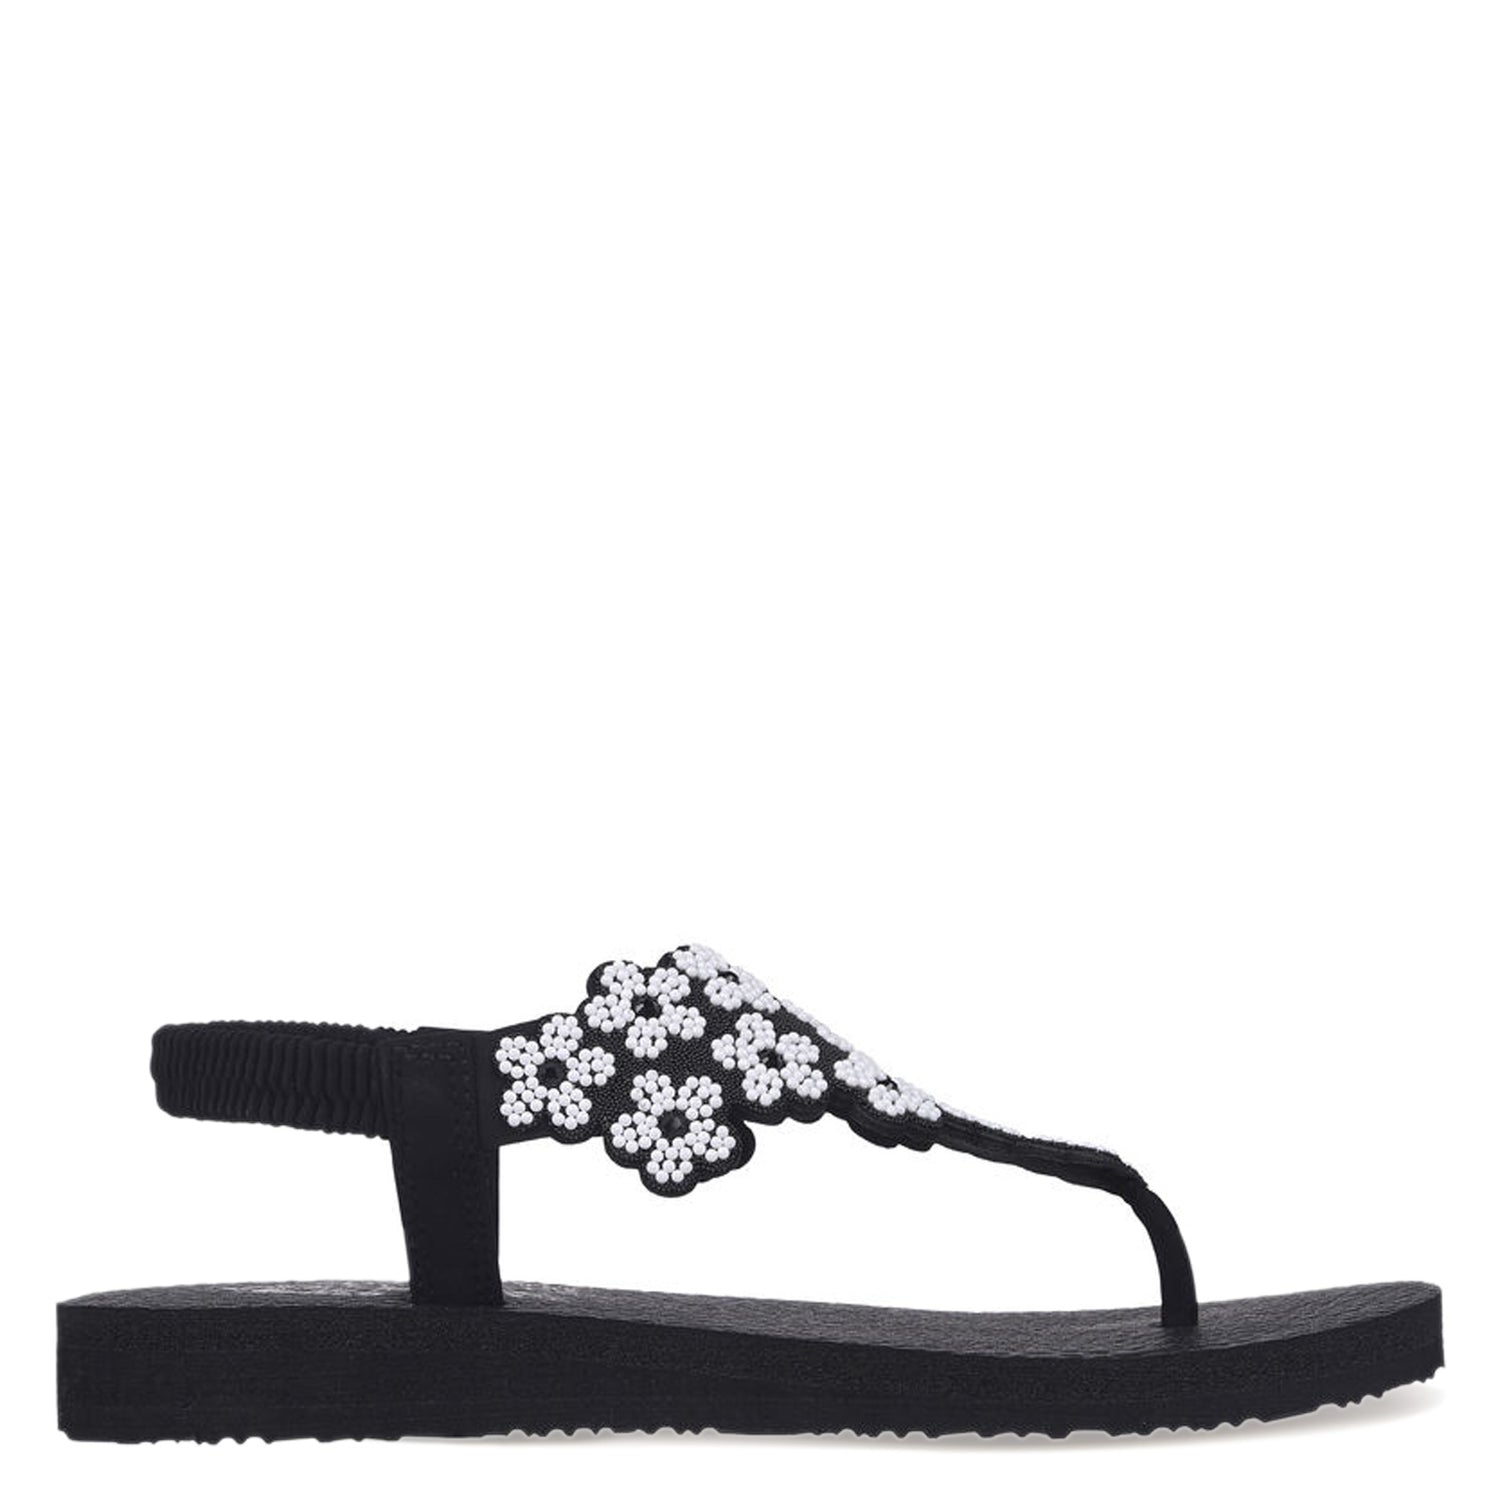 Peltz Shoes  Women's Skechers Meditation - Pearly Thing Sandal black 119657-BLK